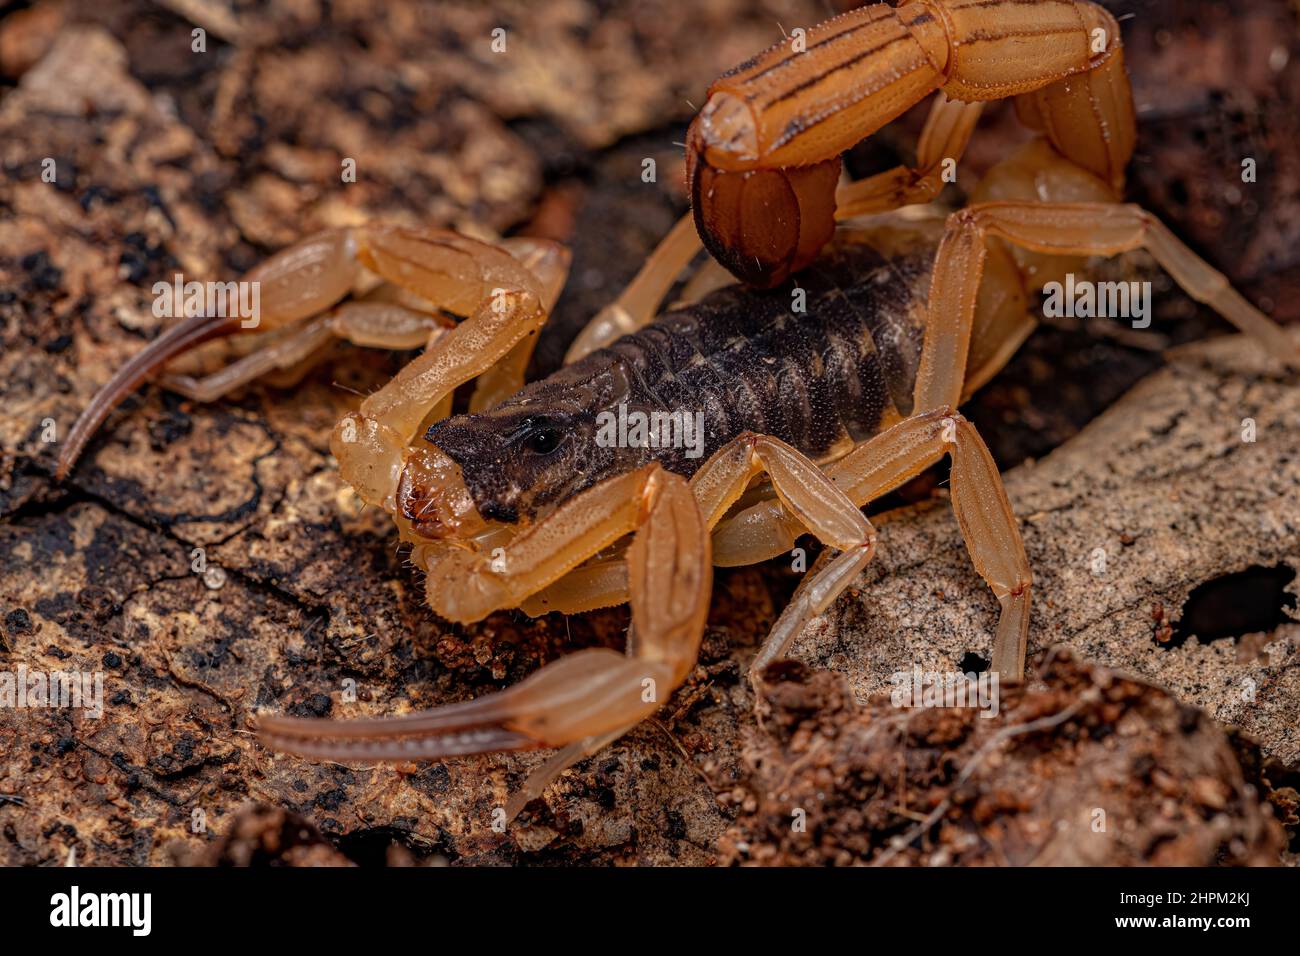 Adult Female Brazilian Yellow Scorpion of the species Tityus serrulatus Stock Photo